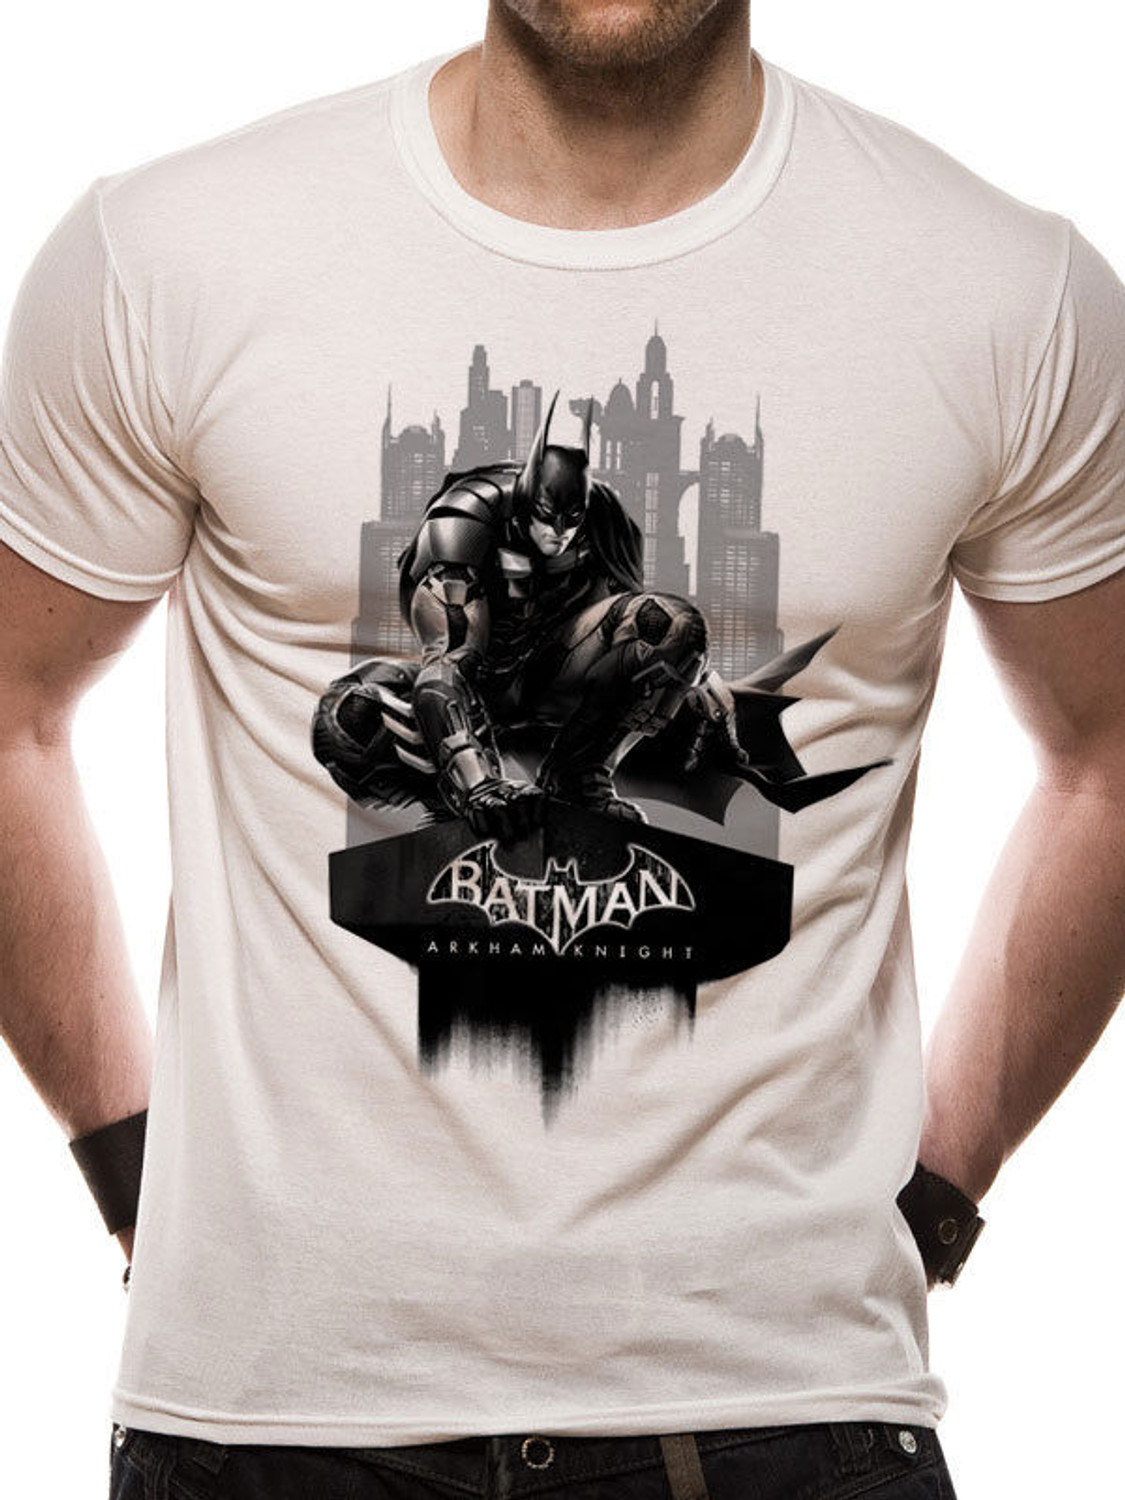 Batman Arkham Knight Arkham Now Official Cityscape T-Shirt. Batman Knight T-shirts at Gotham Buy Unisex